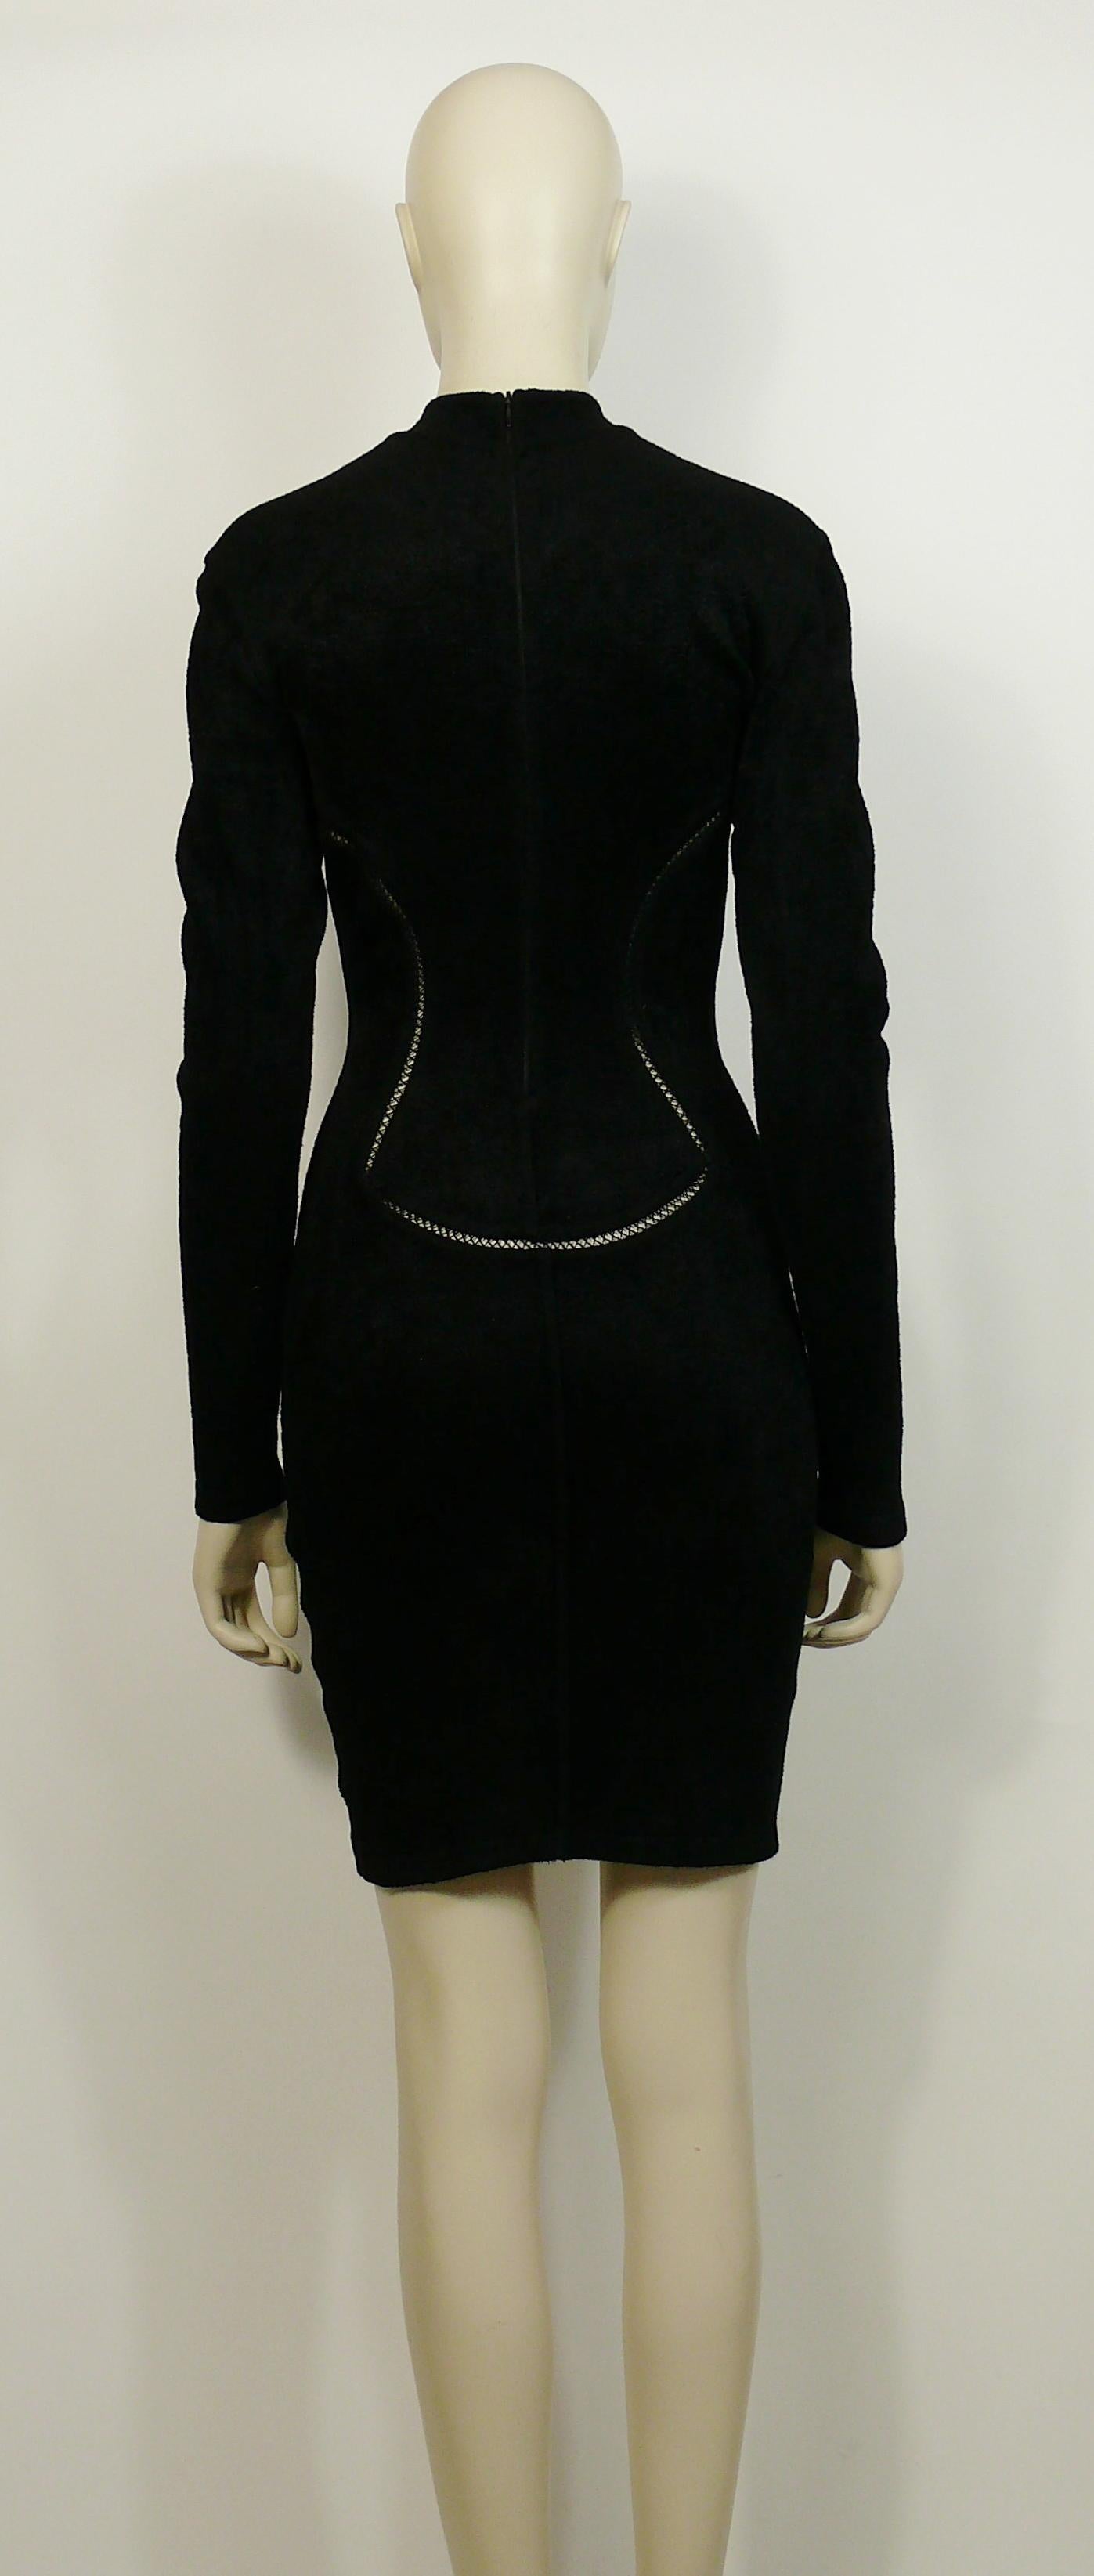 Women's Azzedine Alaia Vintage Bodycon Knit Black Dress with Openwork Details F/W 1991 For Sale